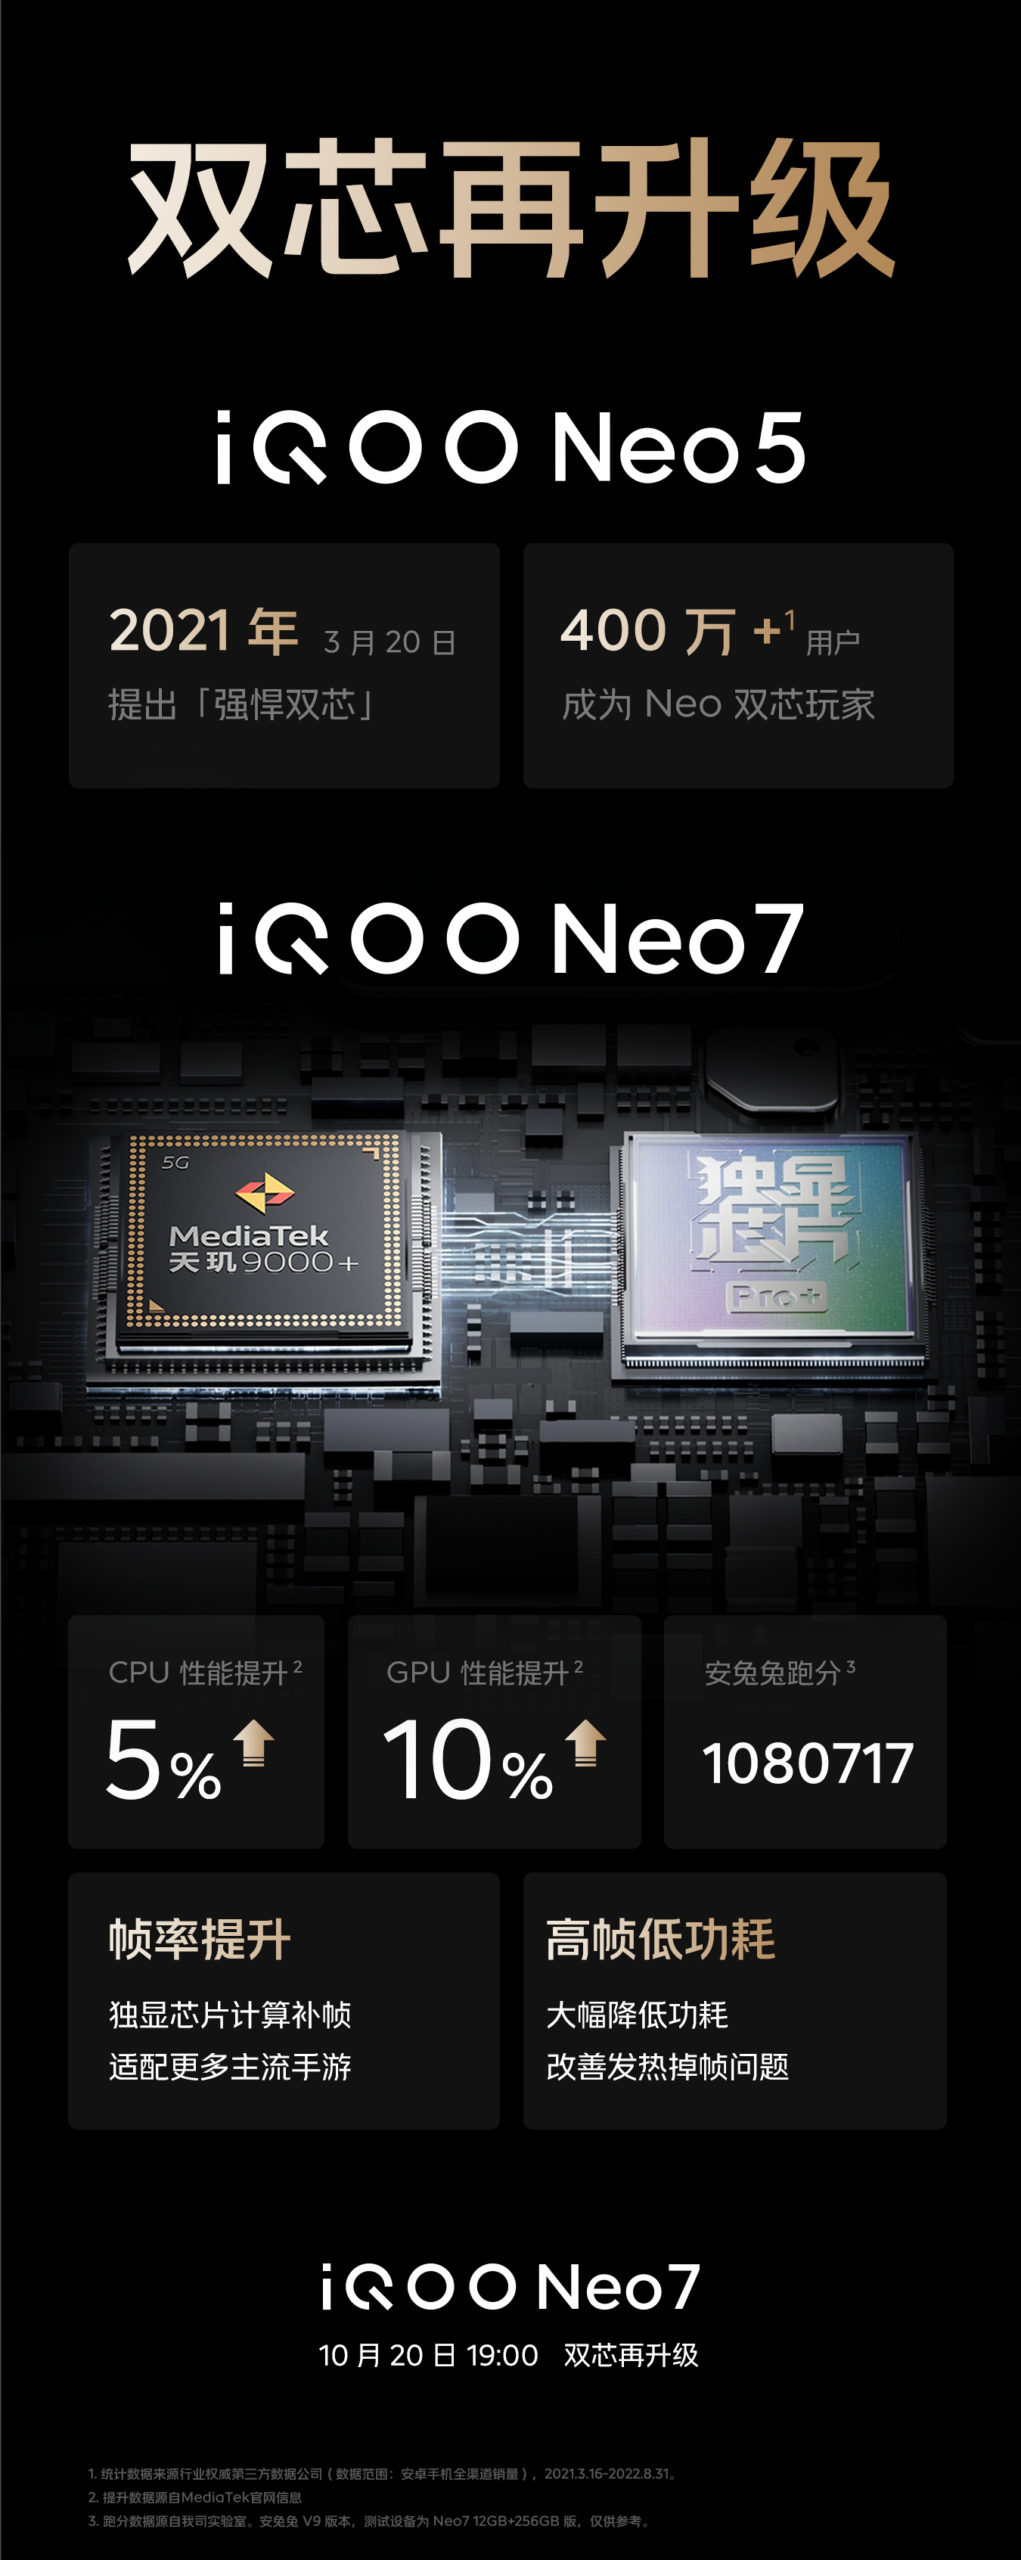 iQOO Neo 7 dimenisty 9000+